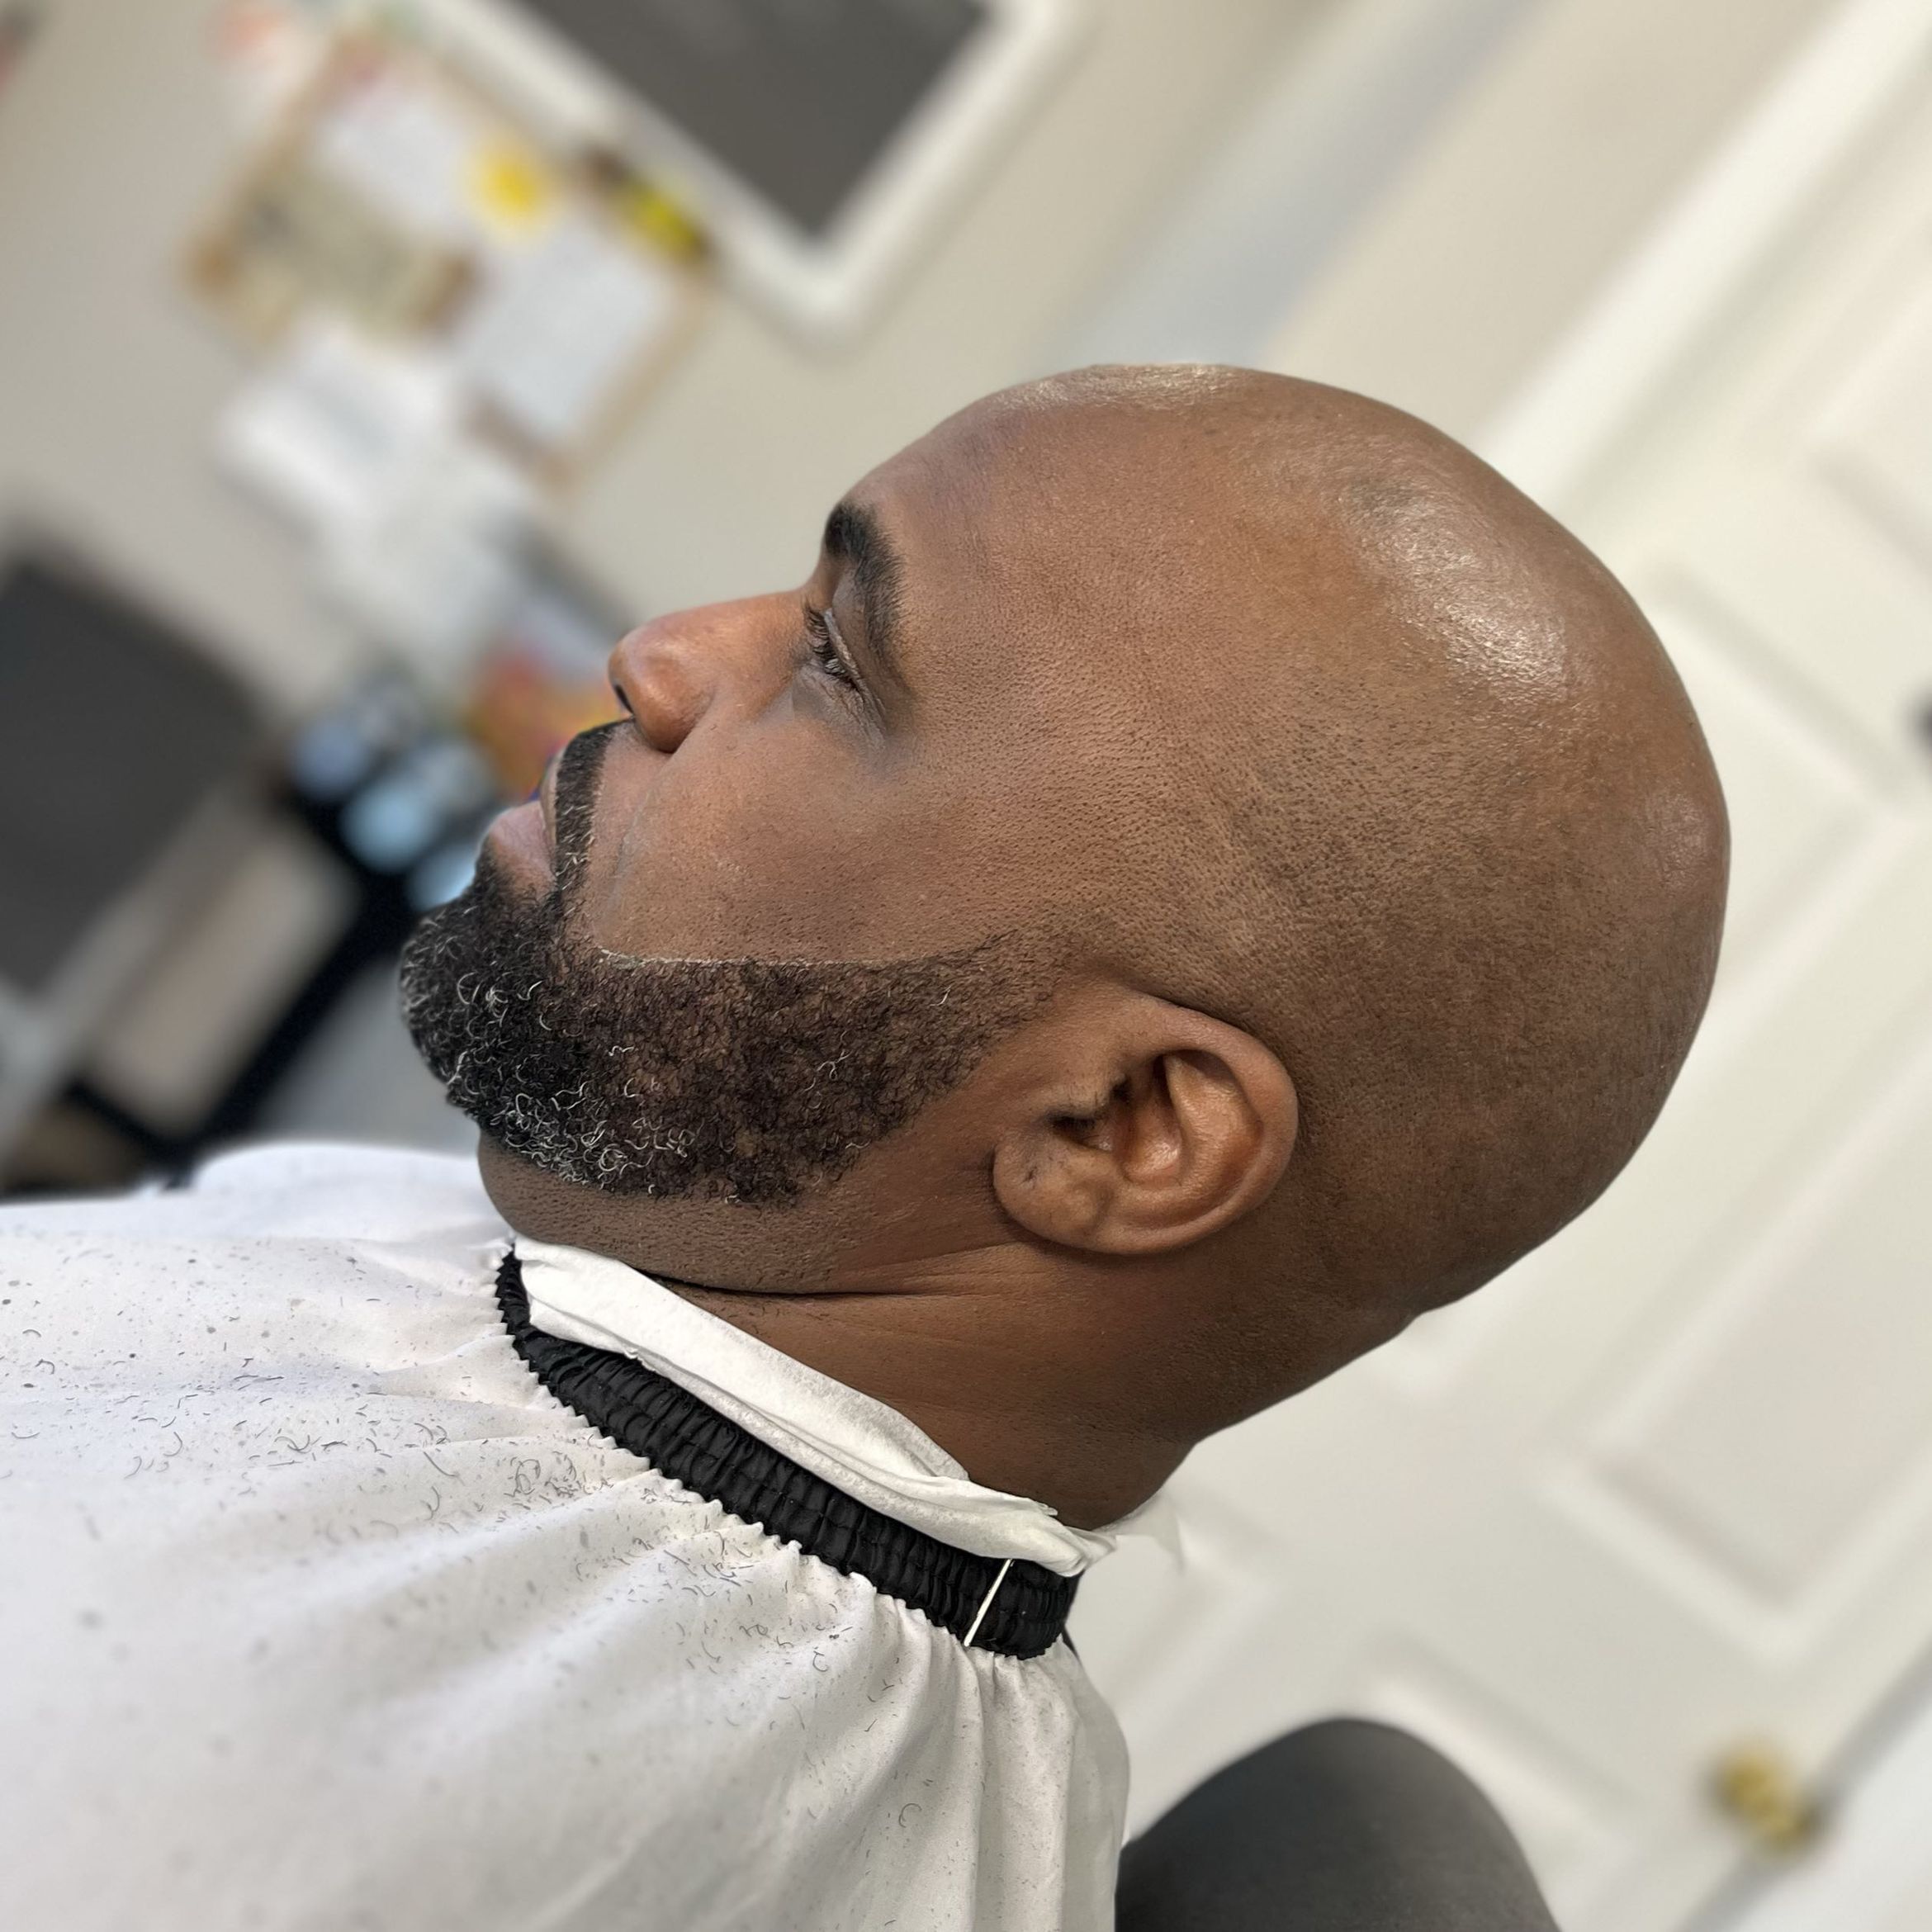 Haircut and beard (no steam towel) portfolio